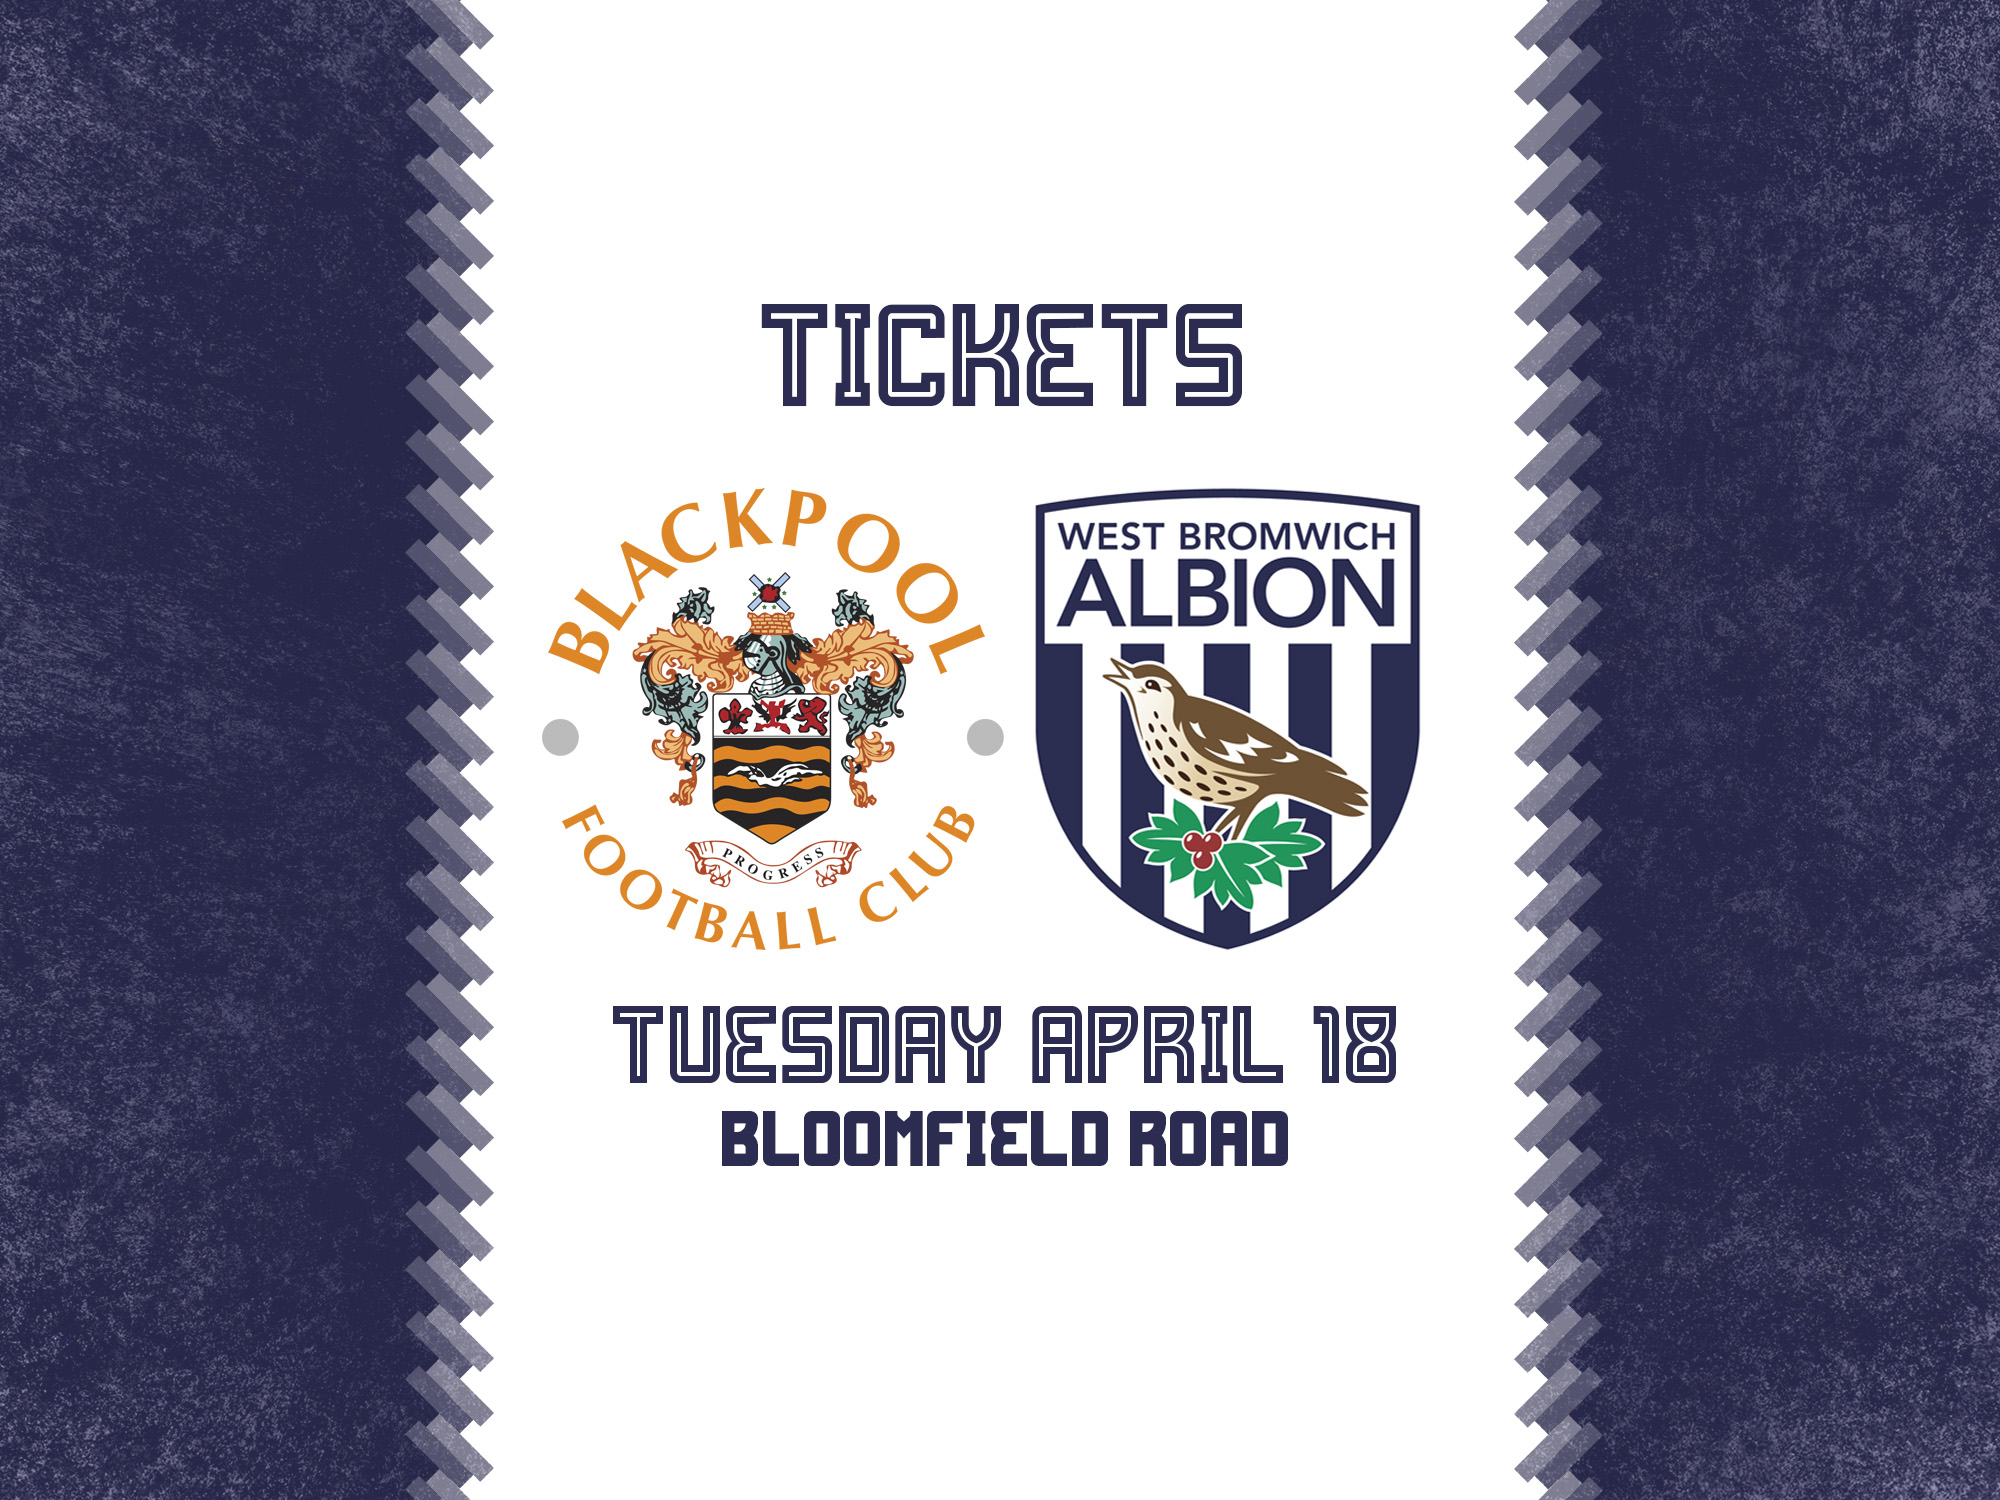 Blackpool ticket details